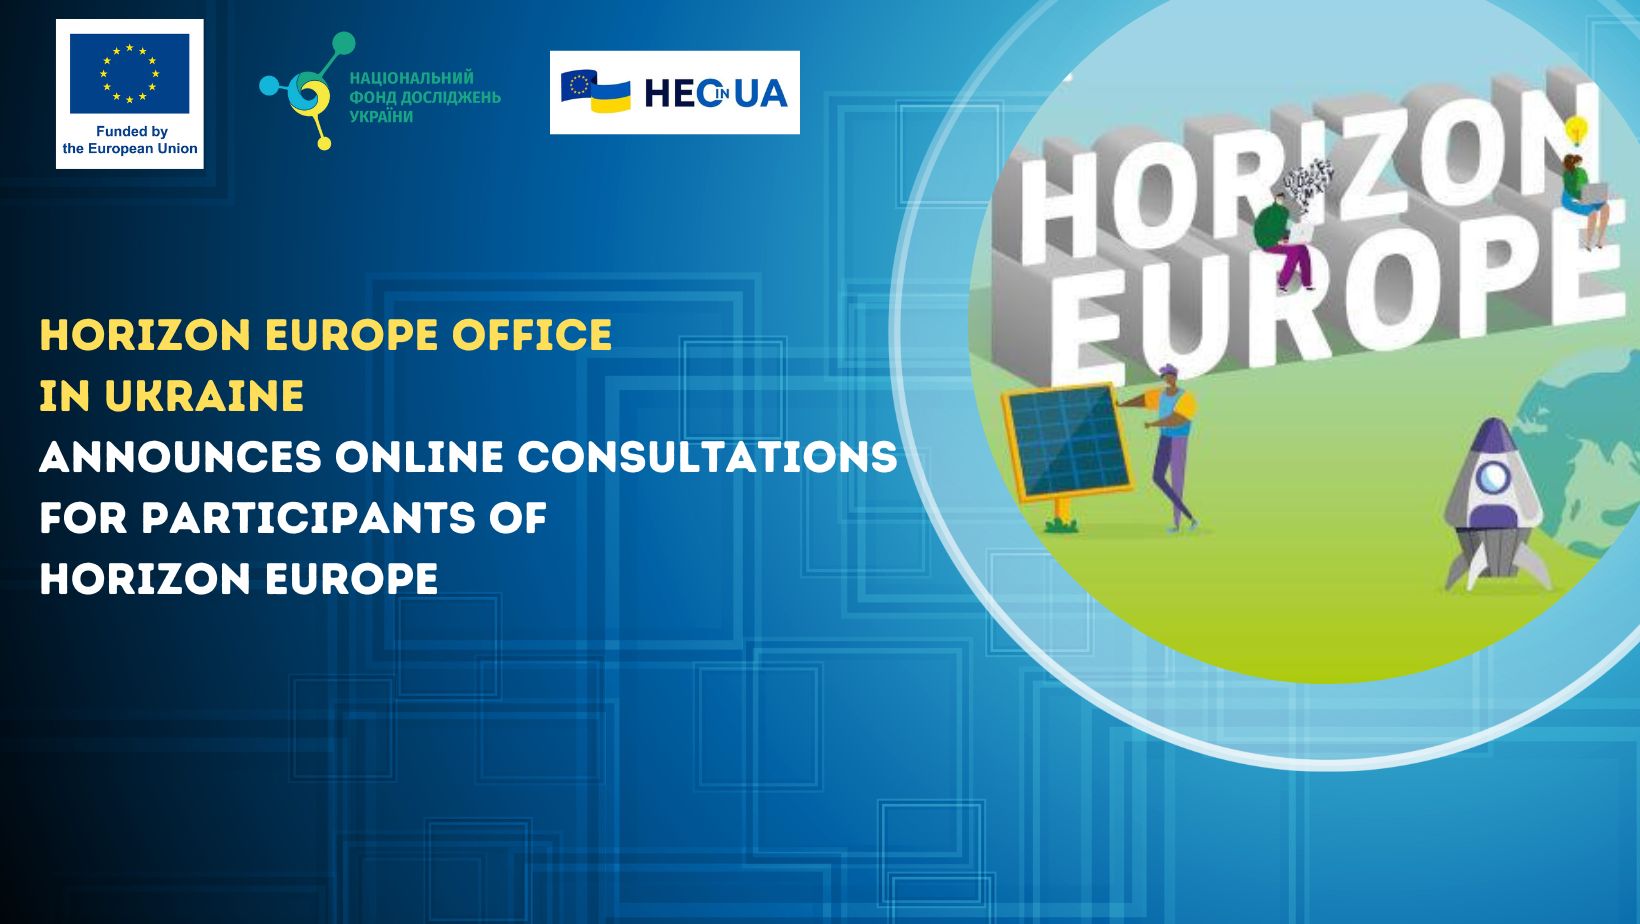 Horizon Europe Office in Ukraine announces online consultations for participants of Horizon Europe